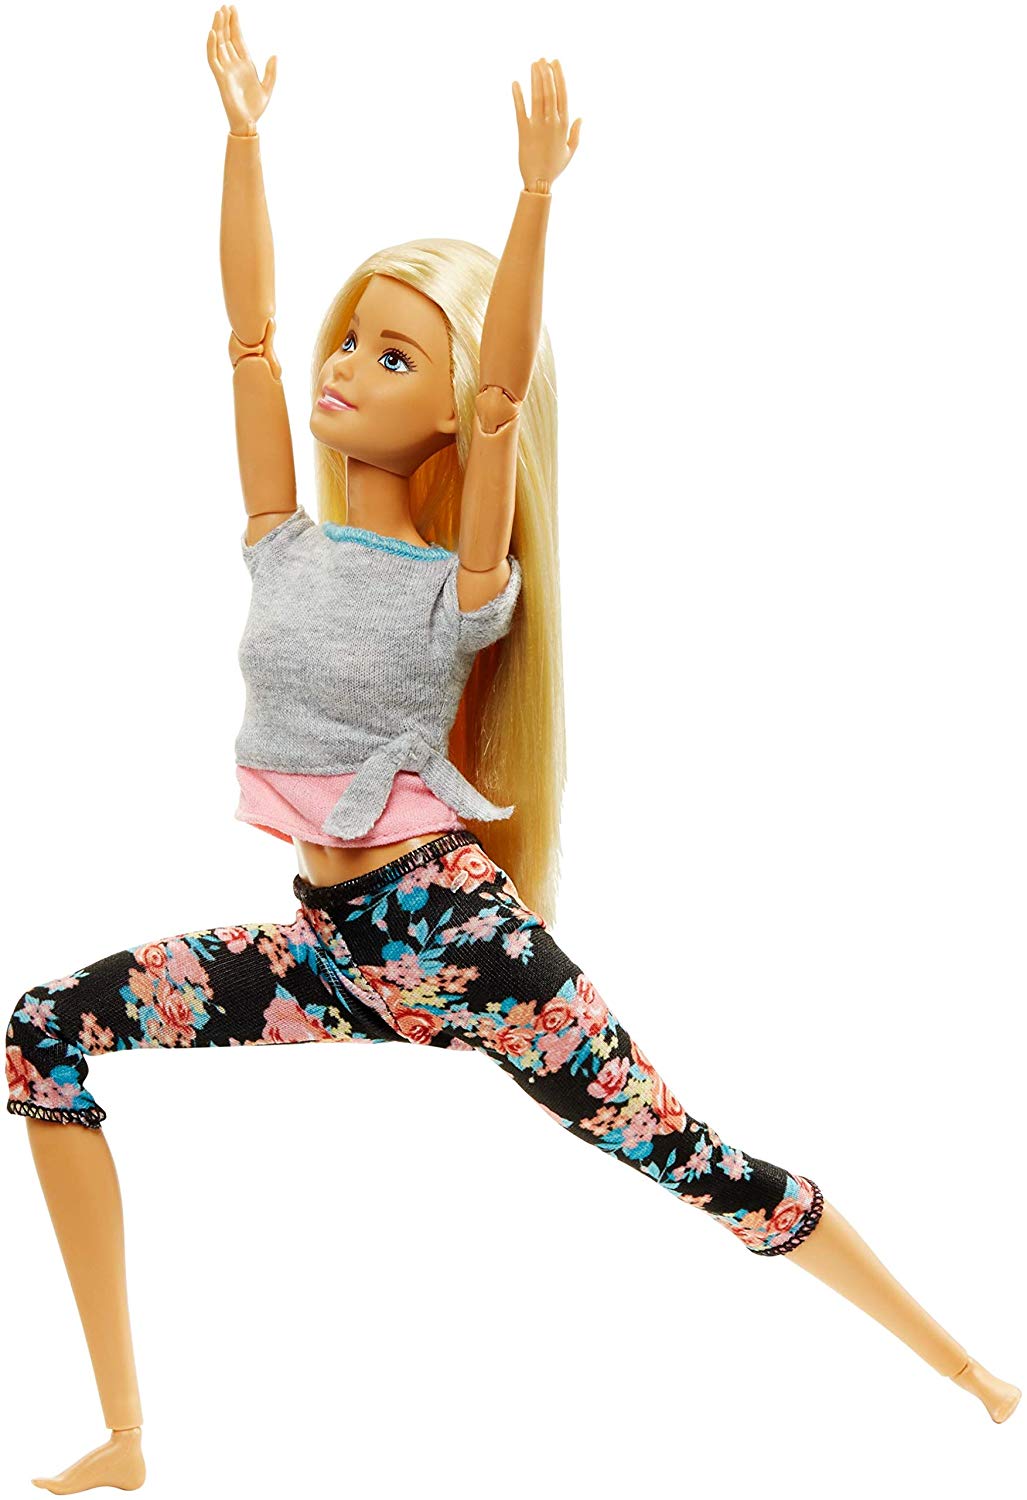 Barbie Made To Move Curvy Sales Discounts Save 46 Jlcatj Gob Mx